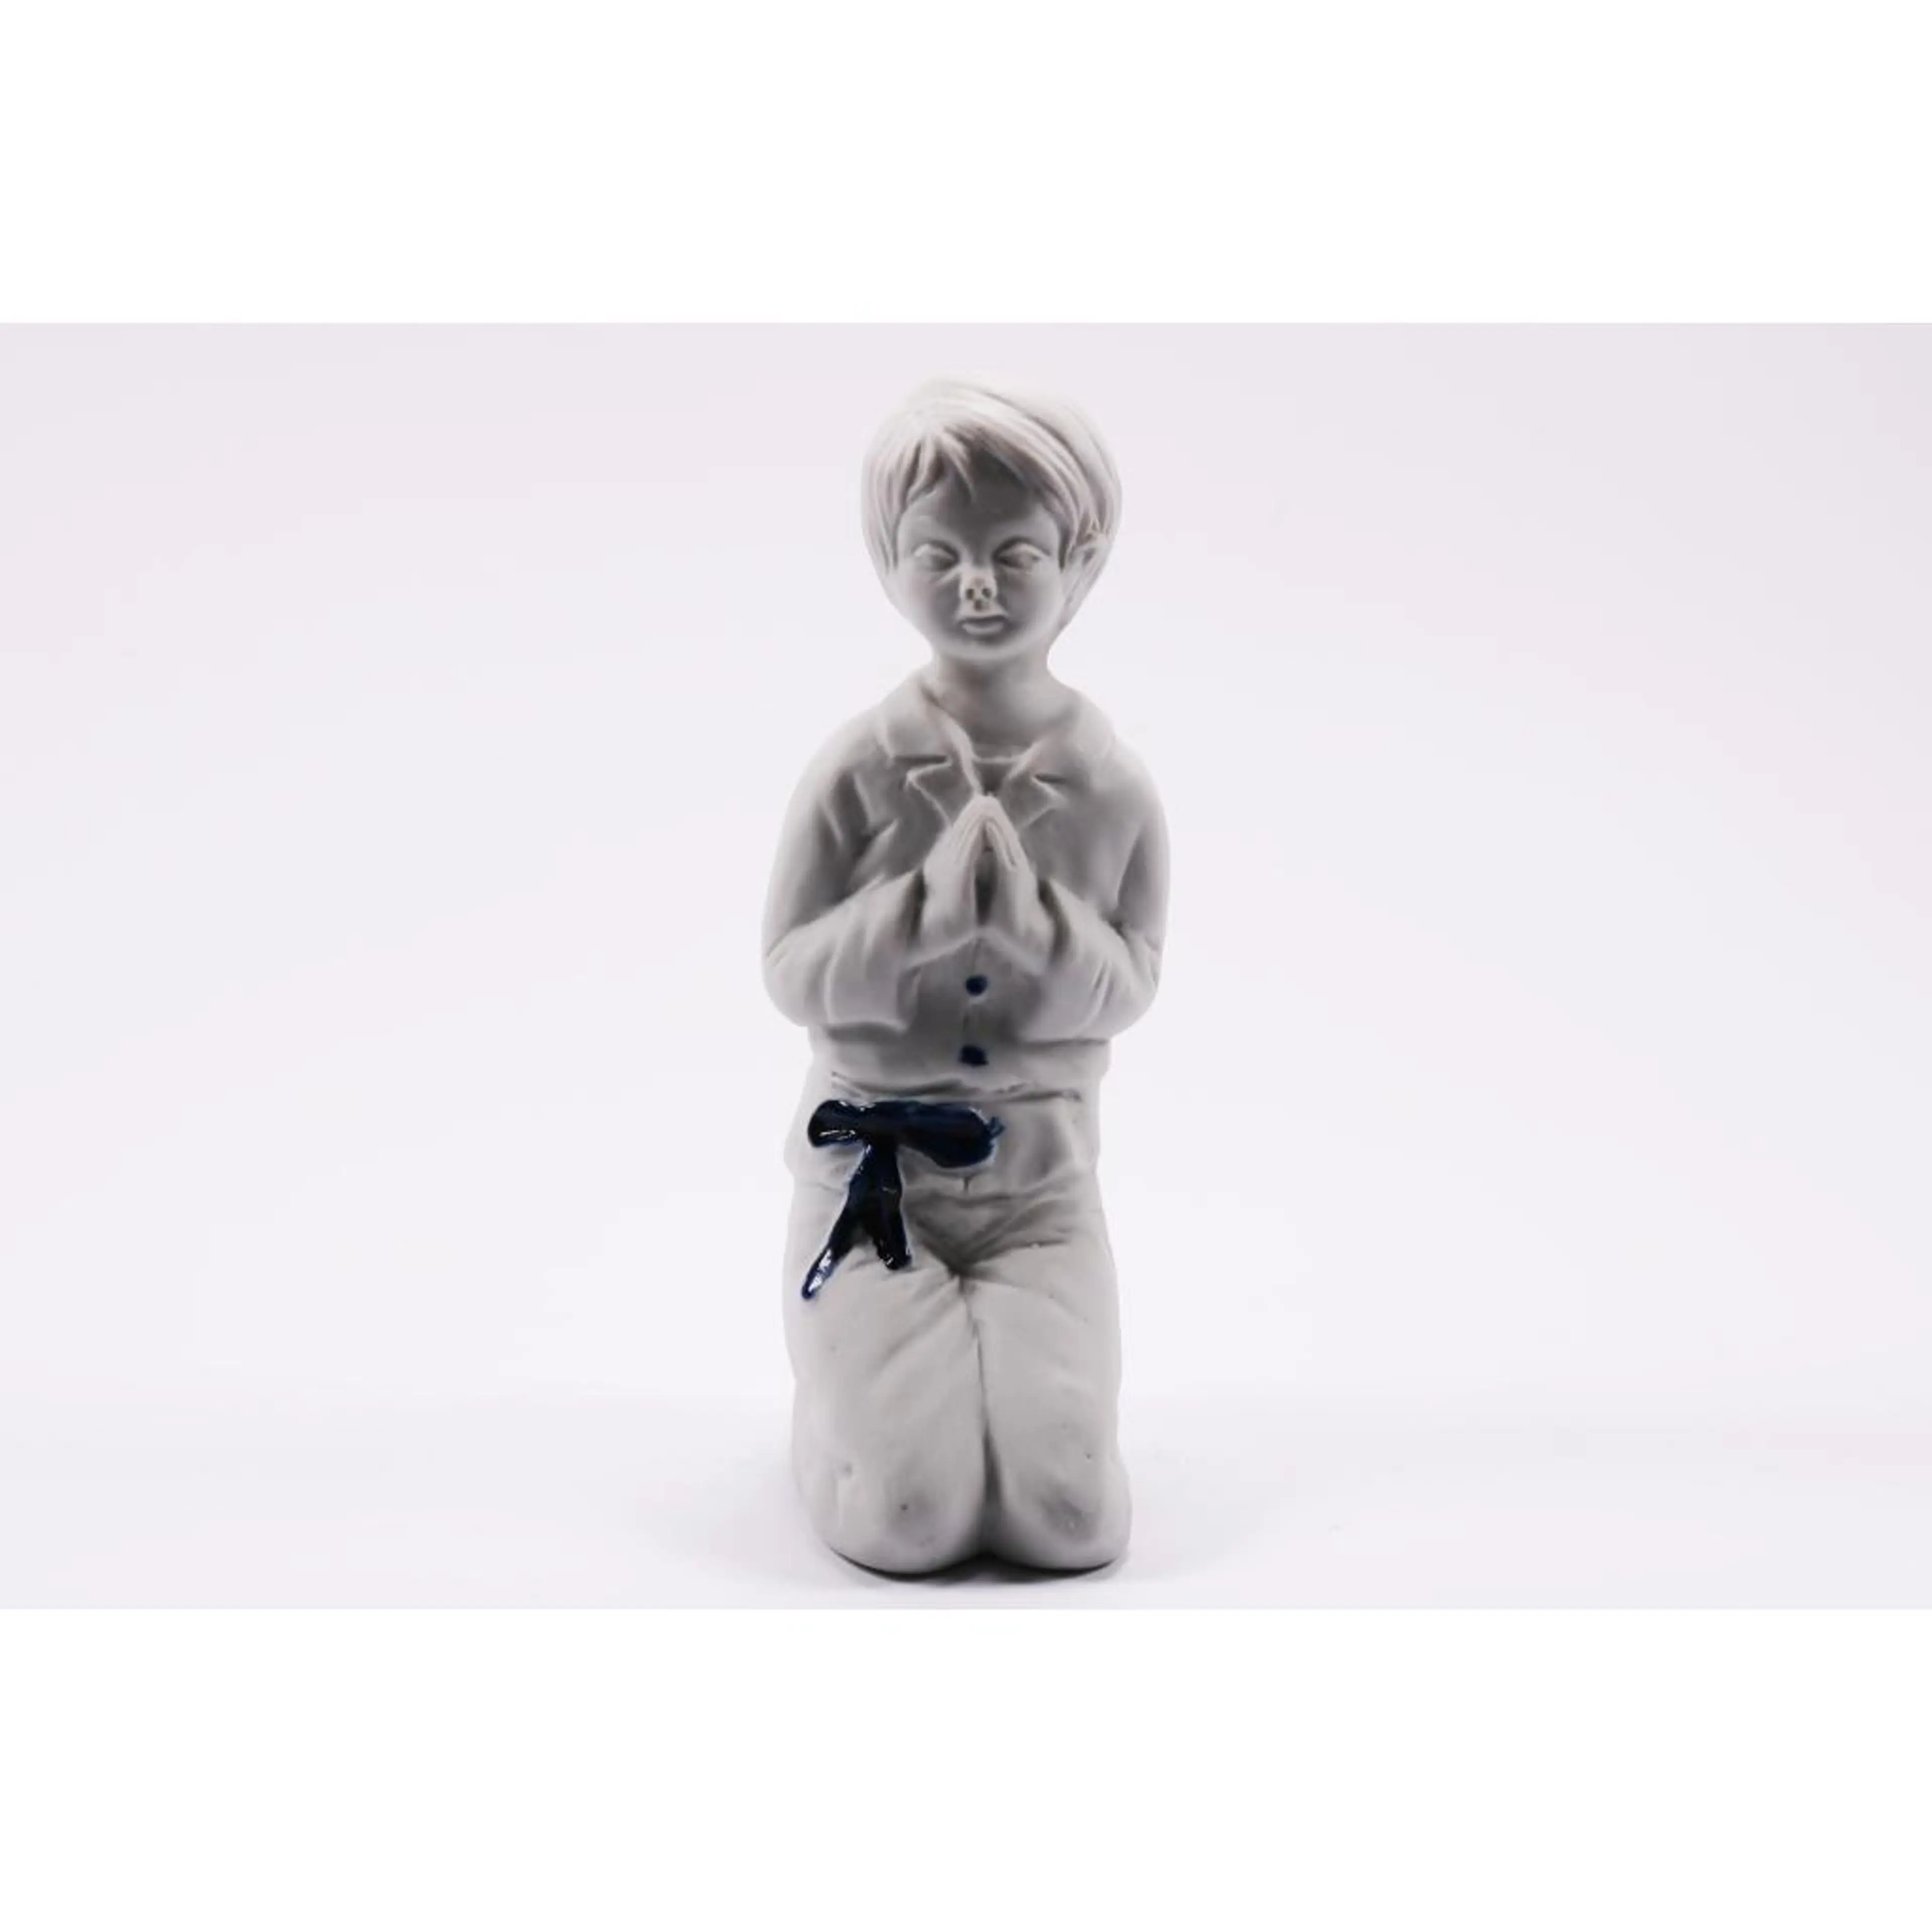 Figurine Boy Pray